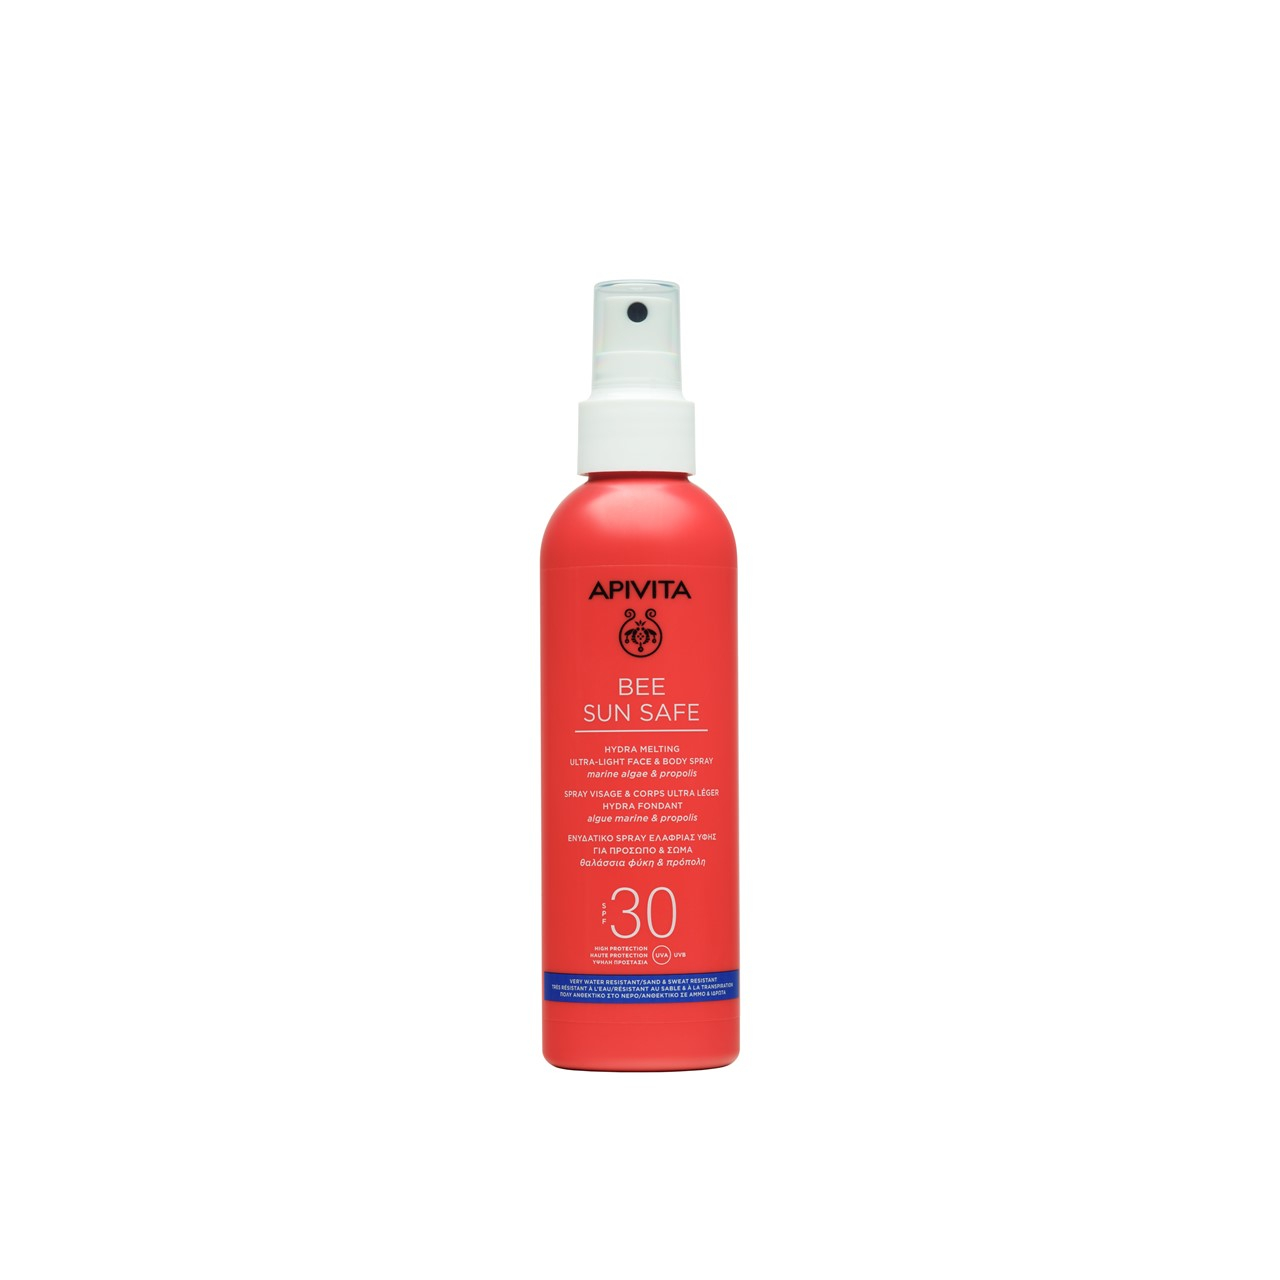 APIVITA Bee Sun Safe Hydra Melting Face & Body Spray SPF30 200ml (6.76floz)